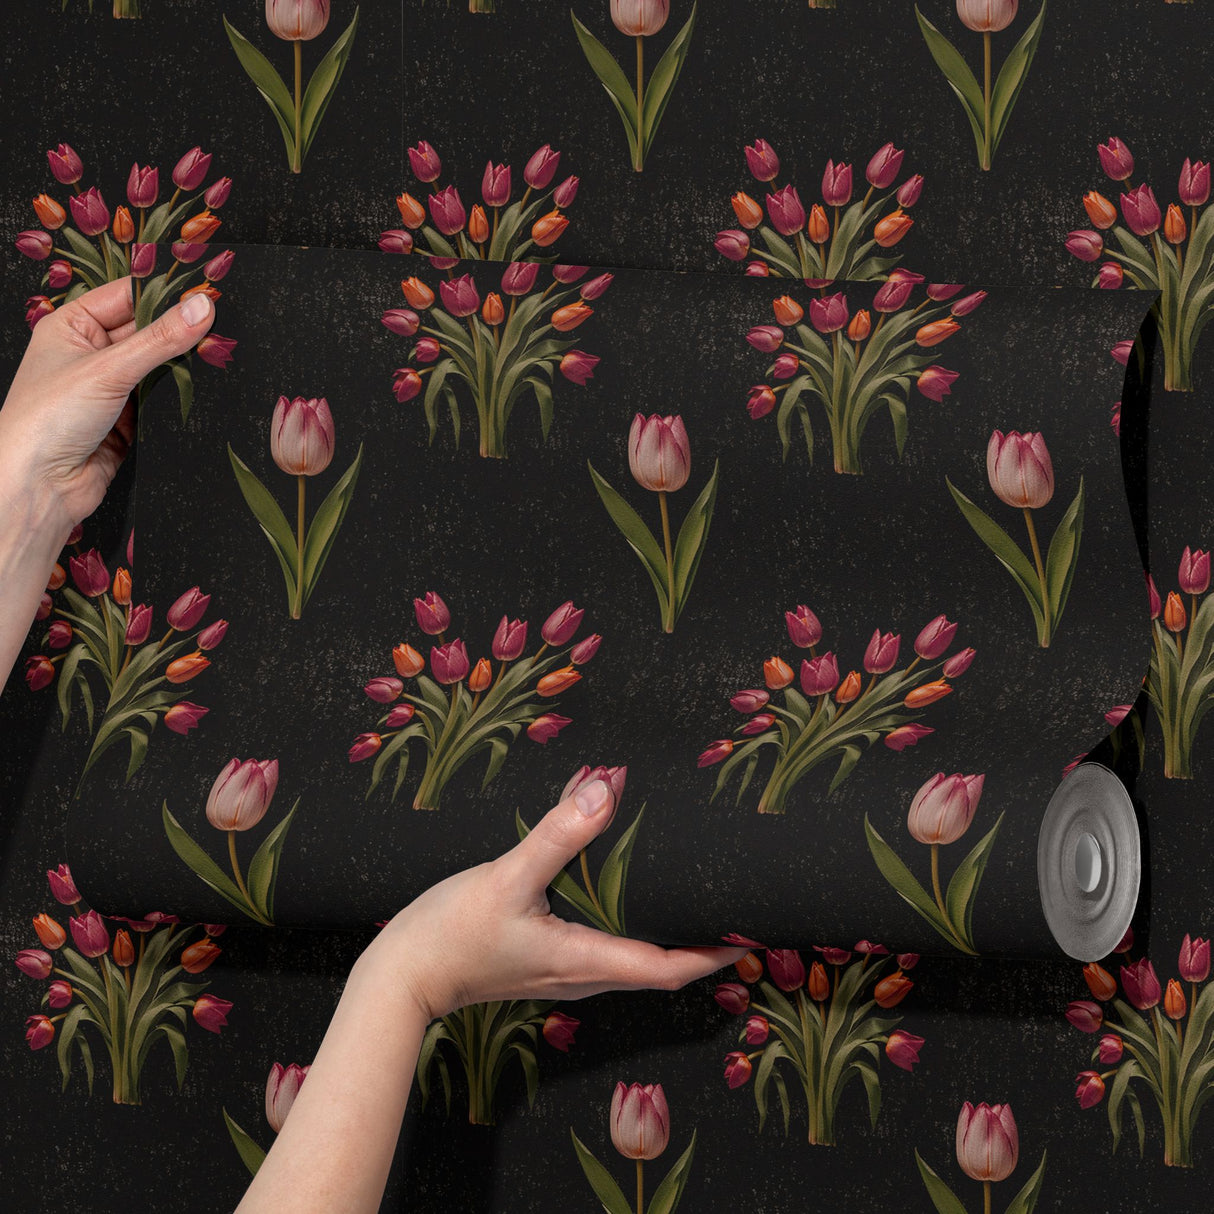 Dark Moody Tulip Floral Wallpaper {Botanical Bunch} Wallpaper Sckribbles   